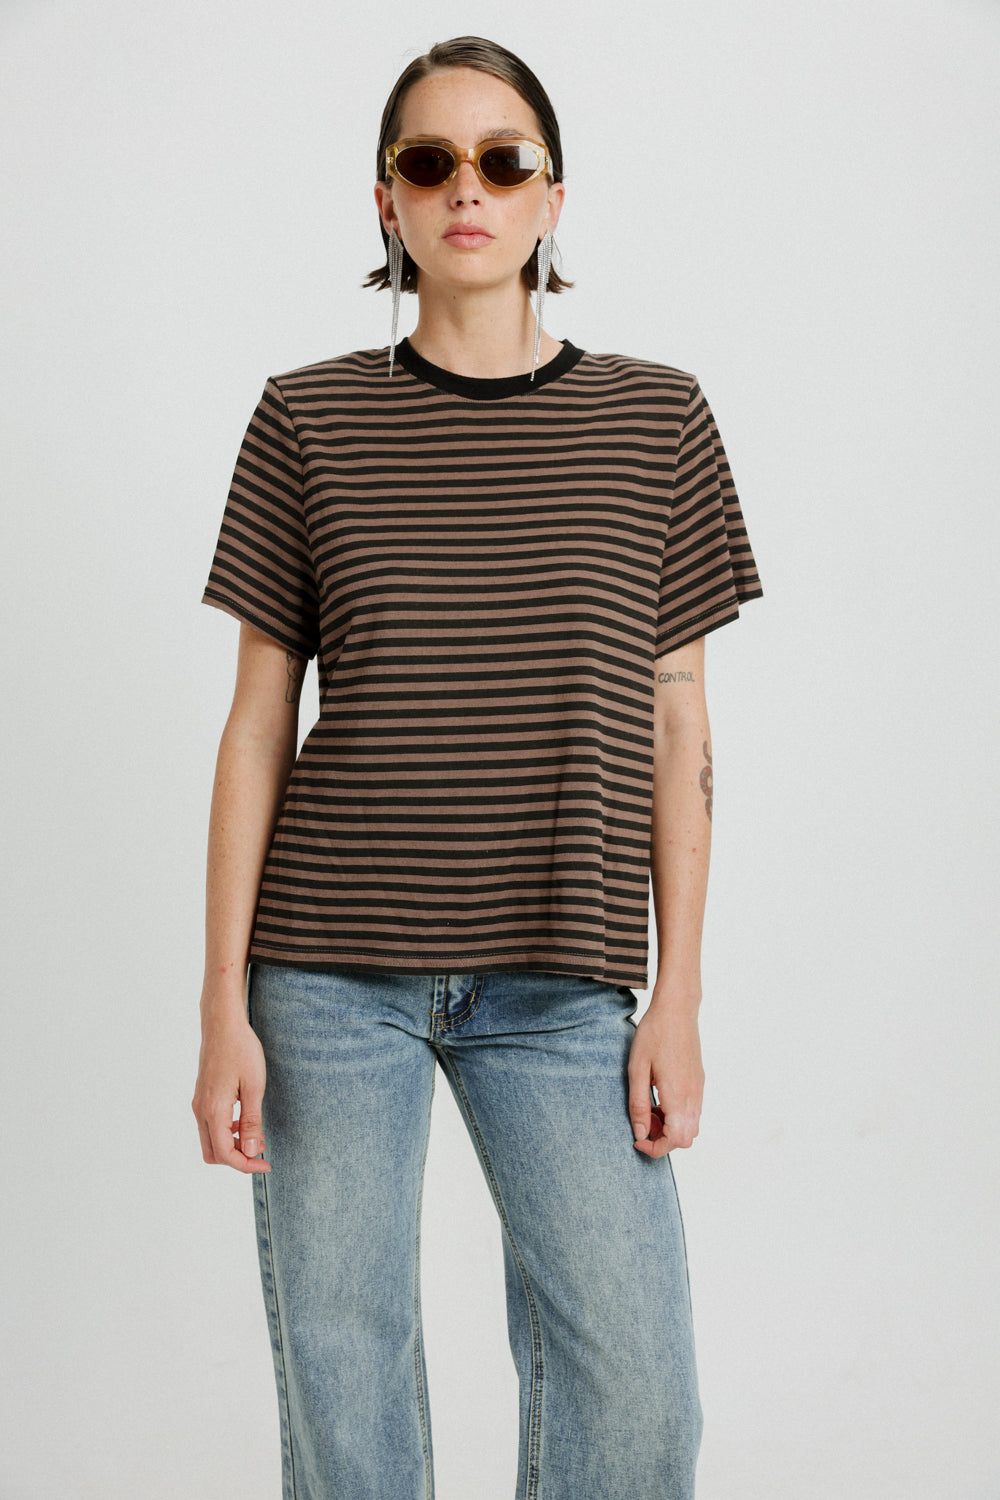 Pioneer Coffee Stripes Padded T-Shirt